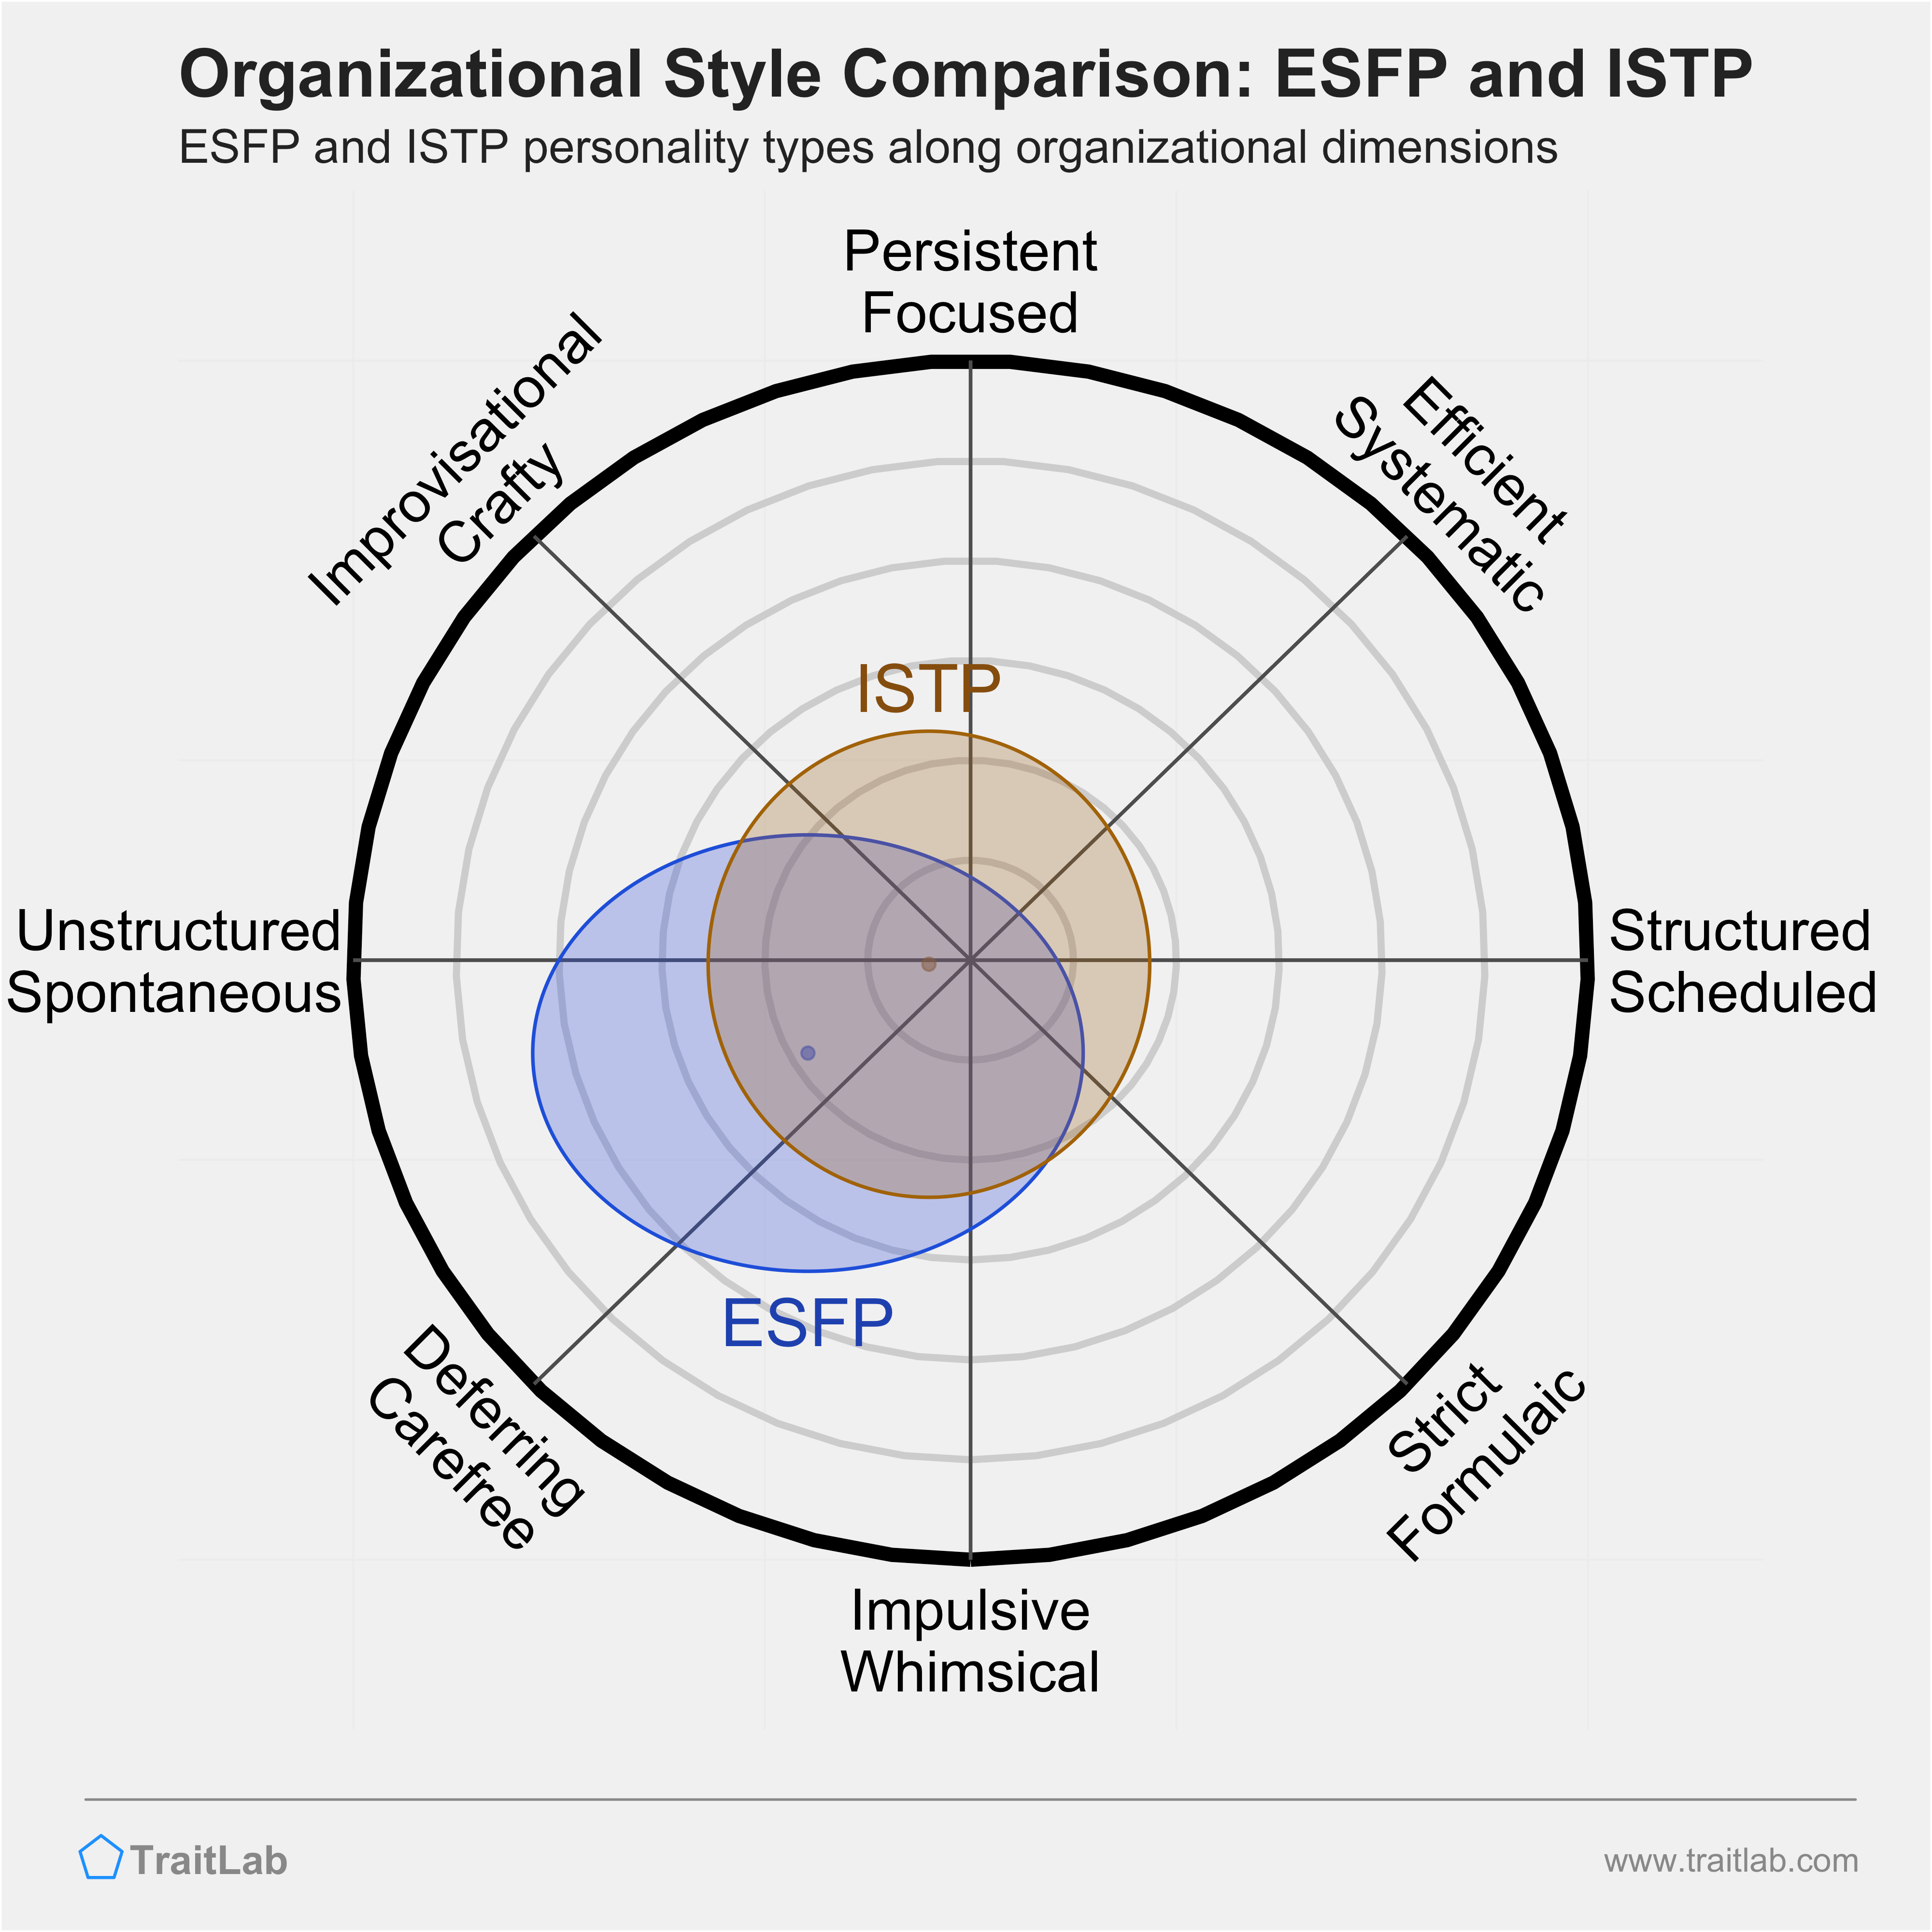 ESFP and ISTP comparison across organizational dimensions